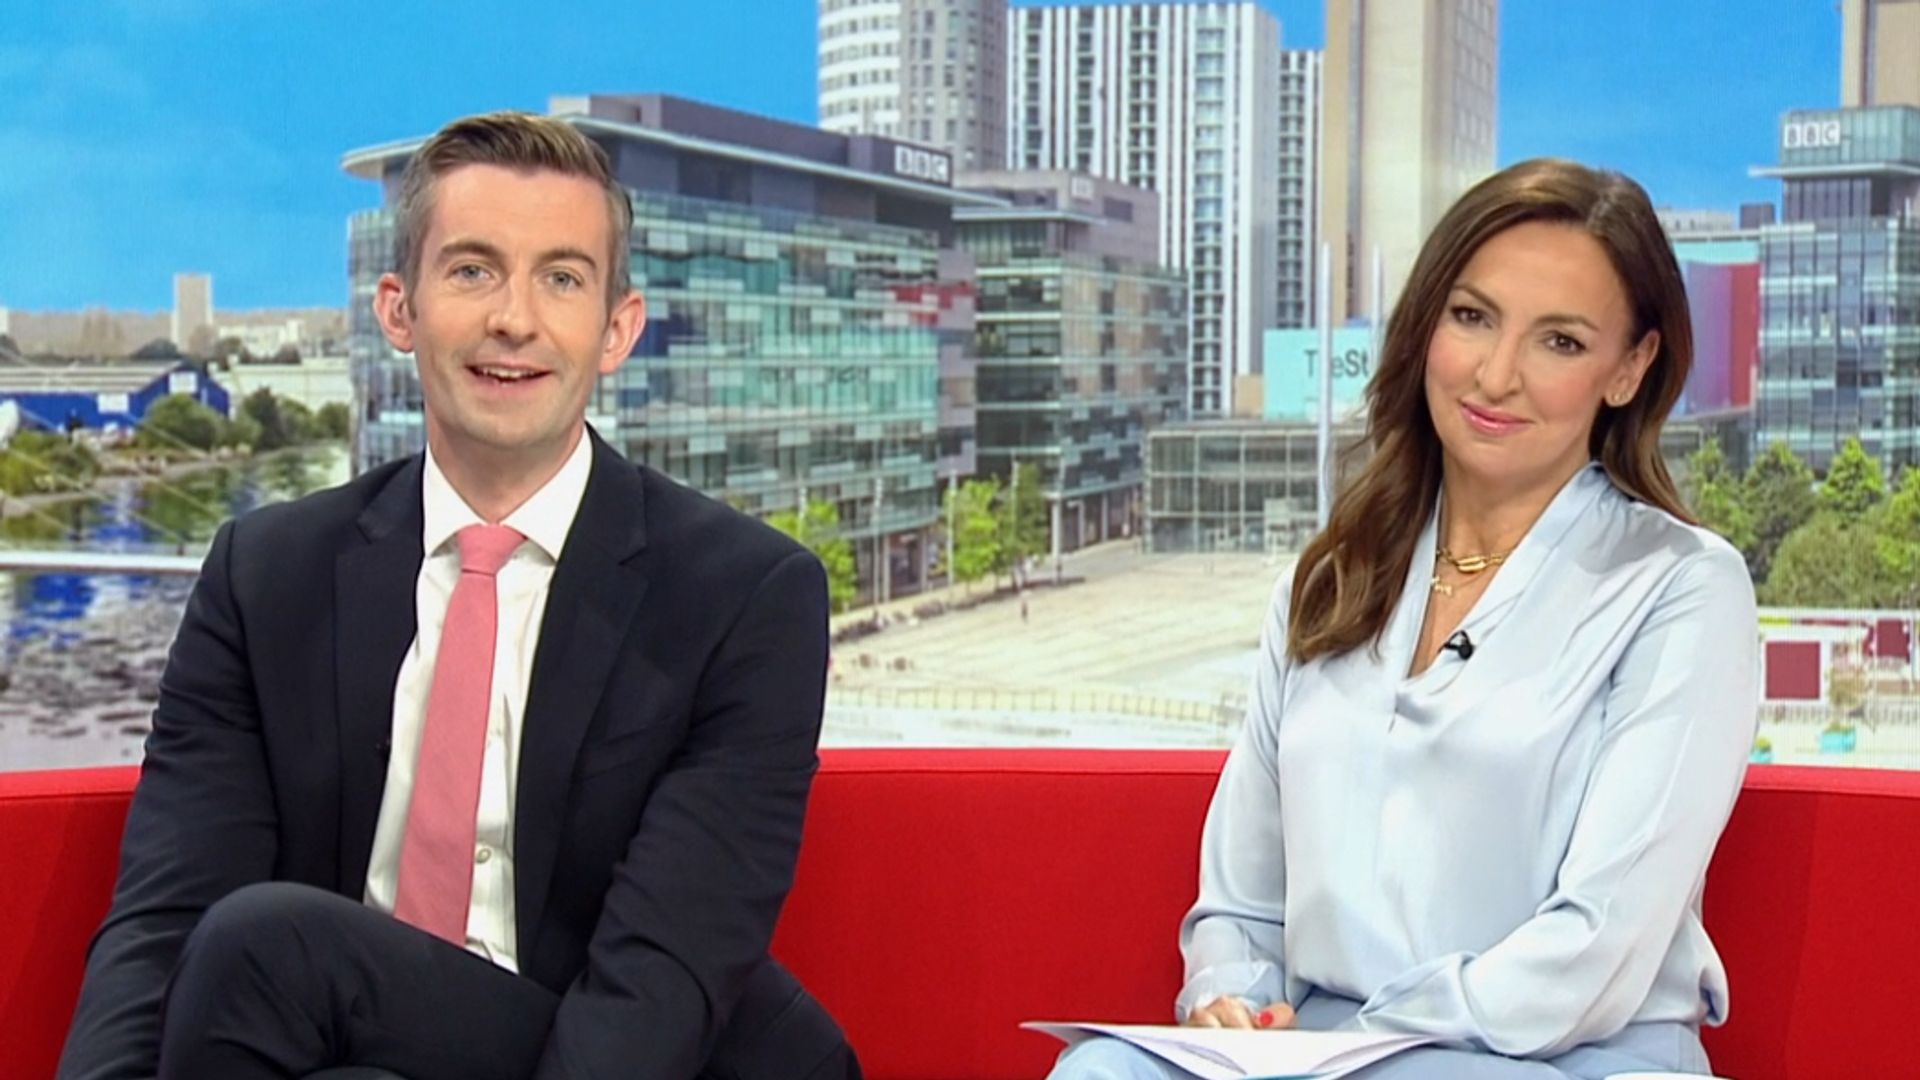 Ben Thompson and Sally Nugent on BBC Breakfast sofa